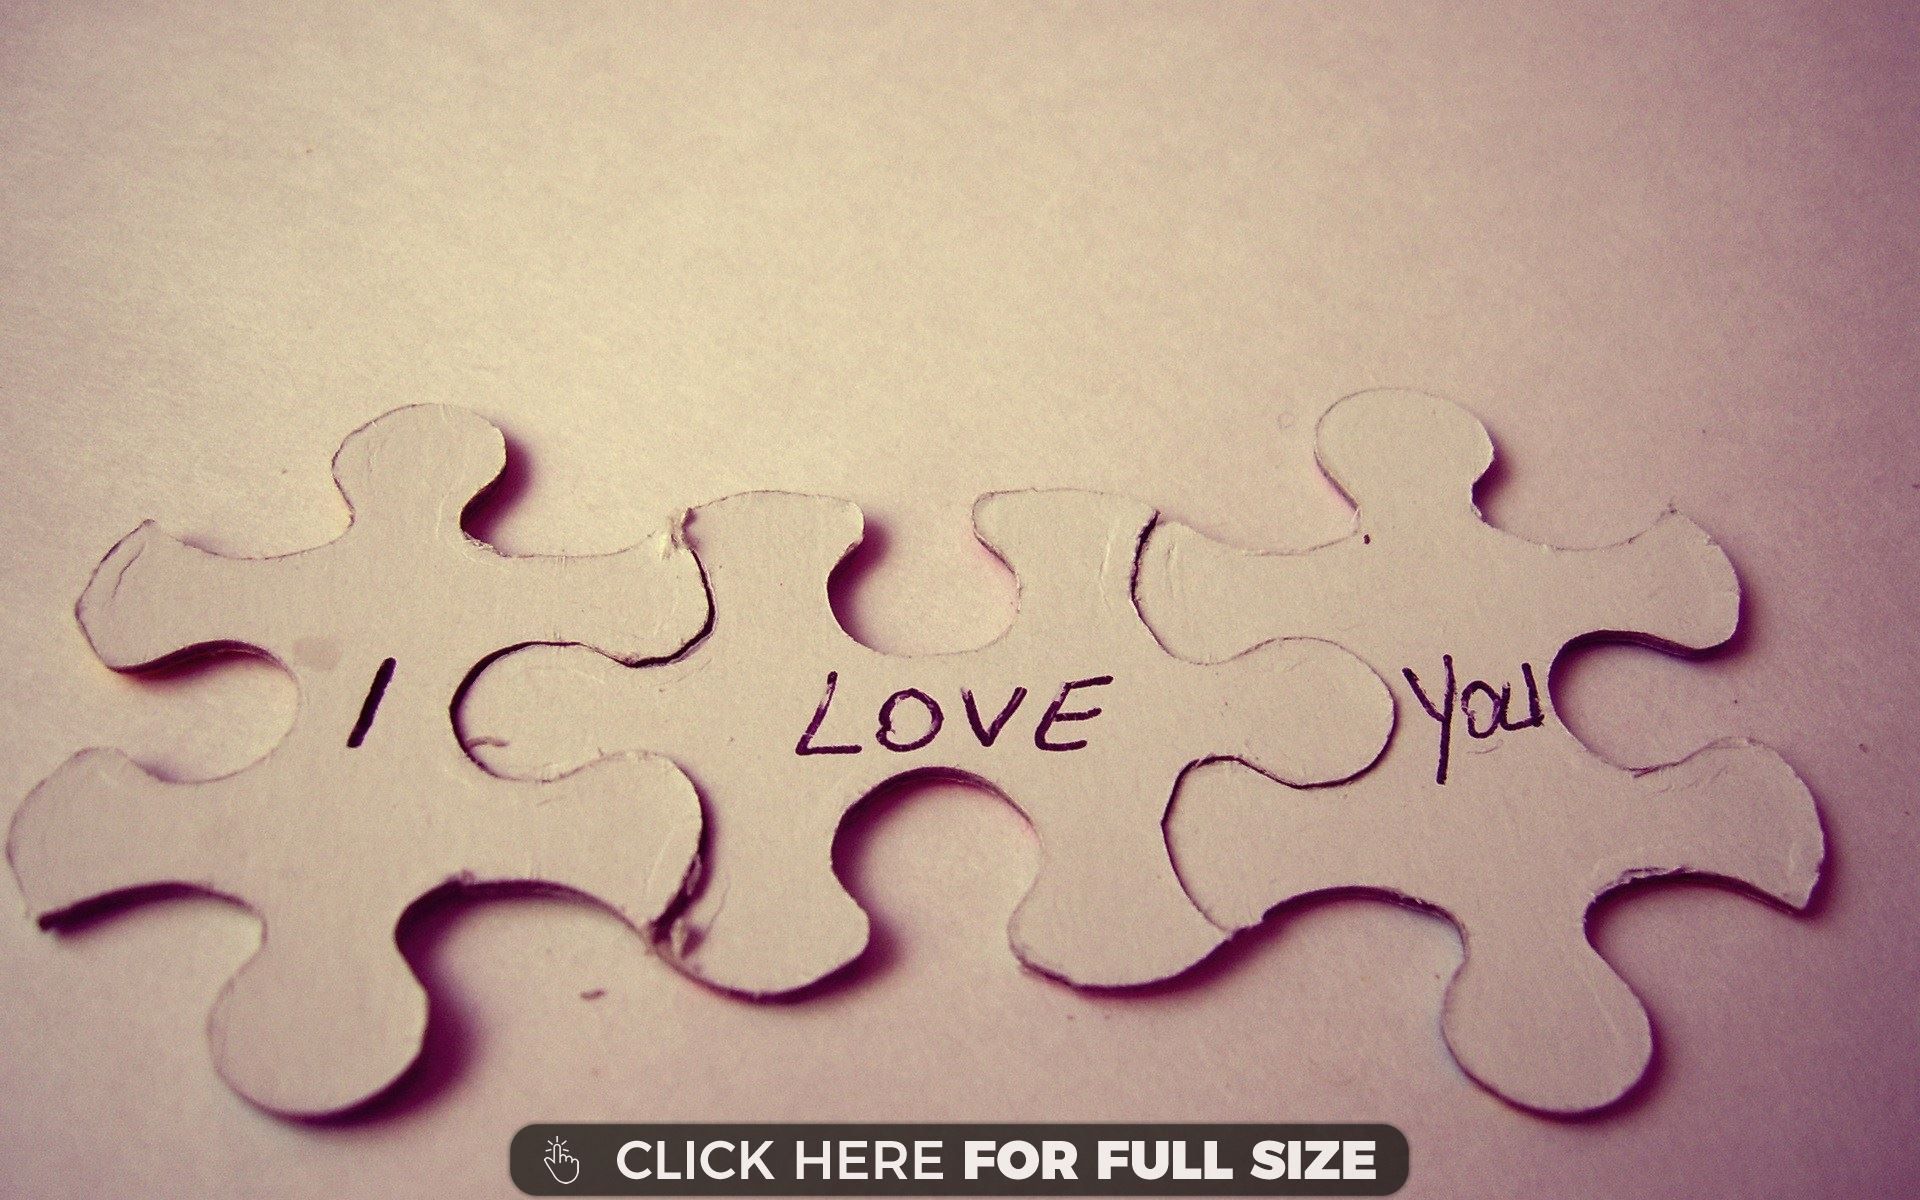 Inlove Quotes Wallpaper Desktop Love Letters